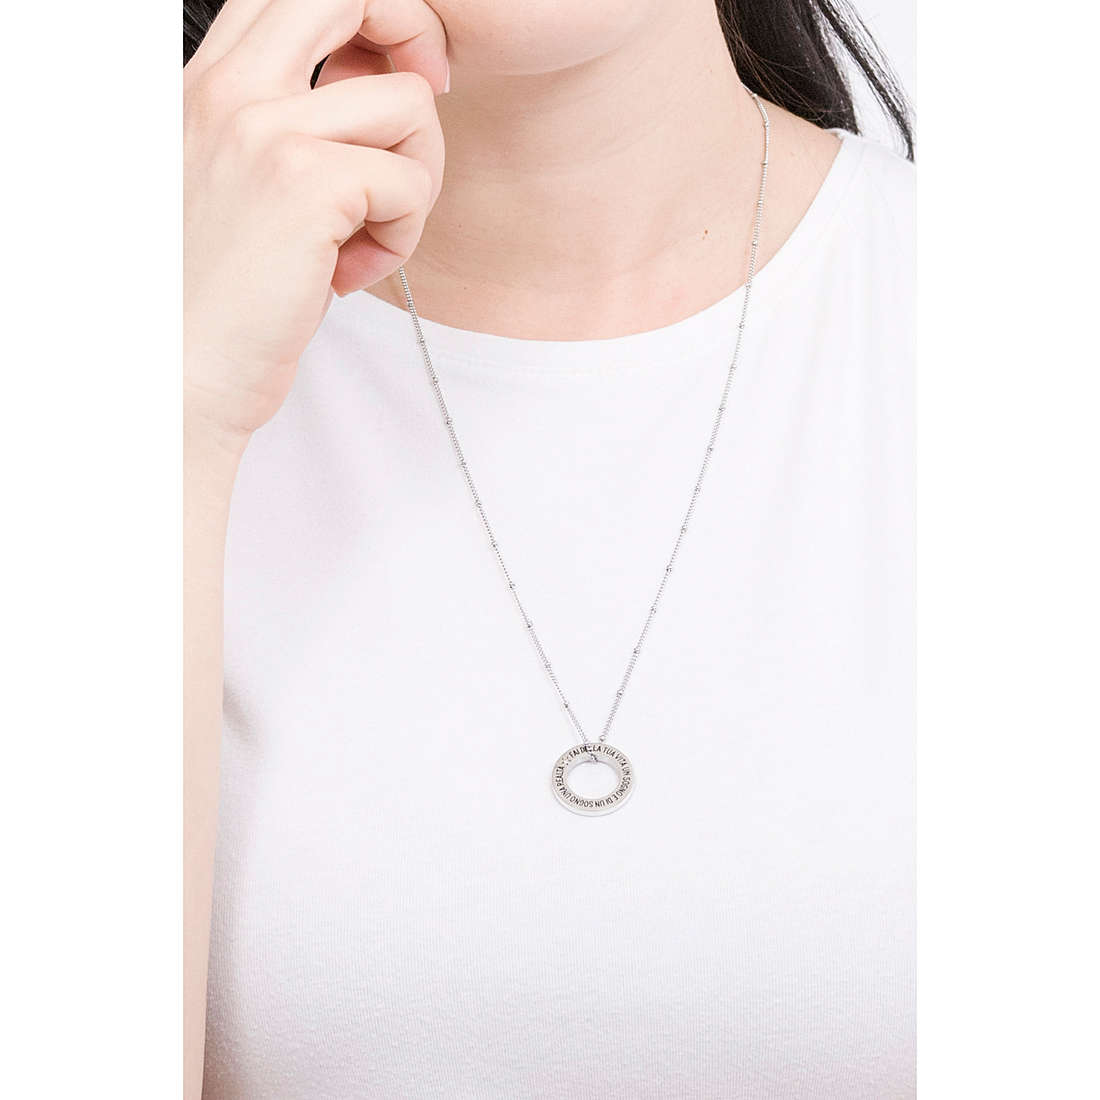 Kidult necklaces Philosophy woman 751174 wearing